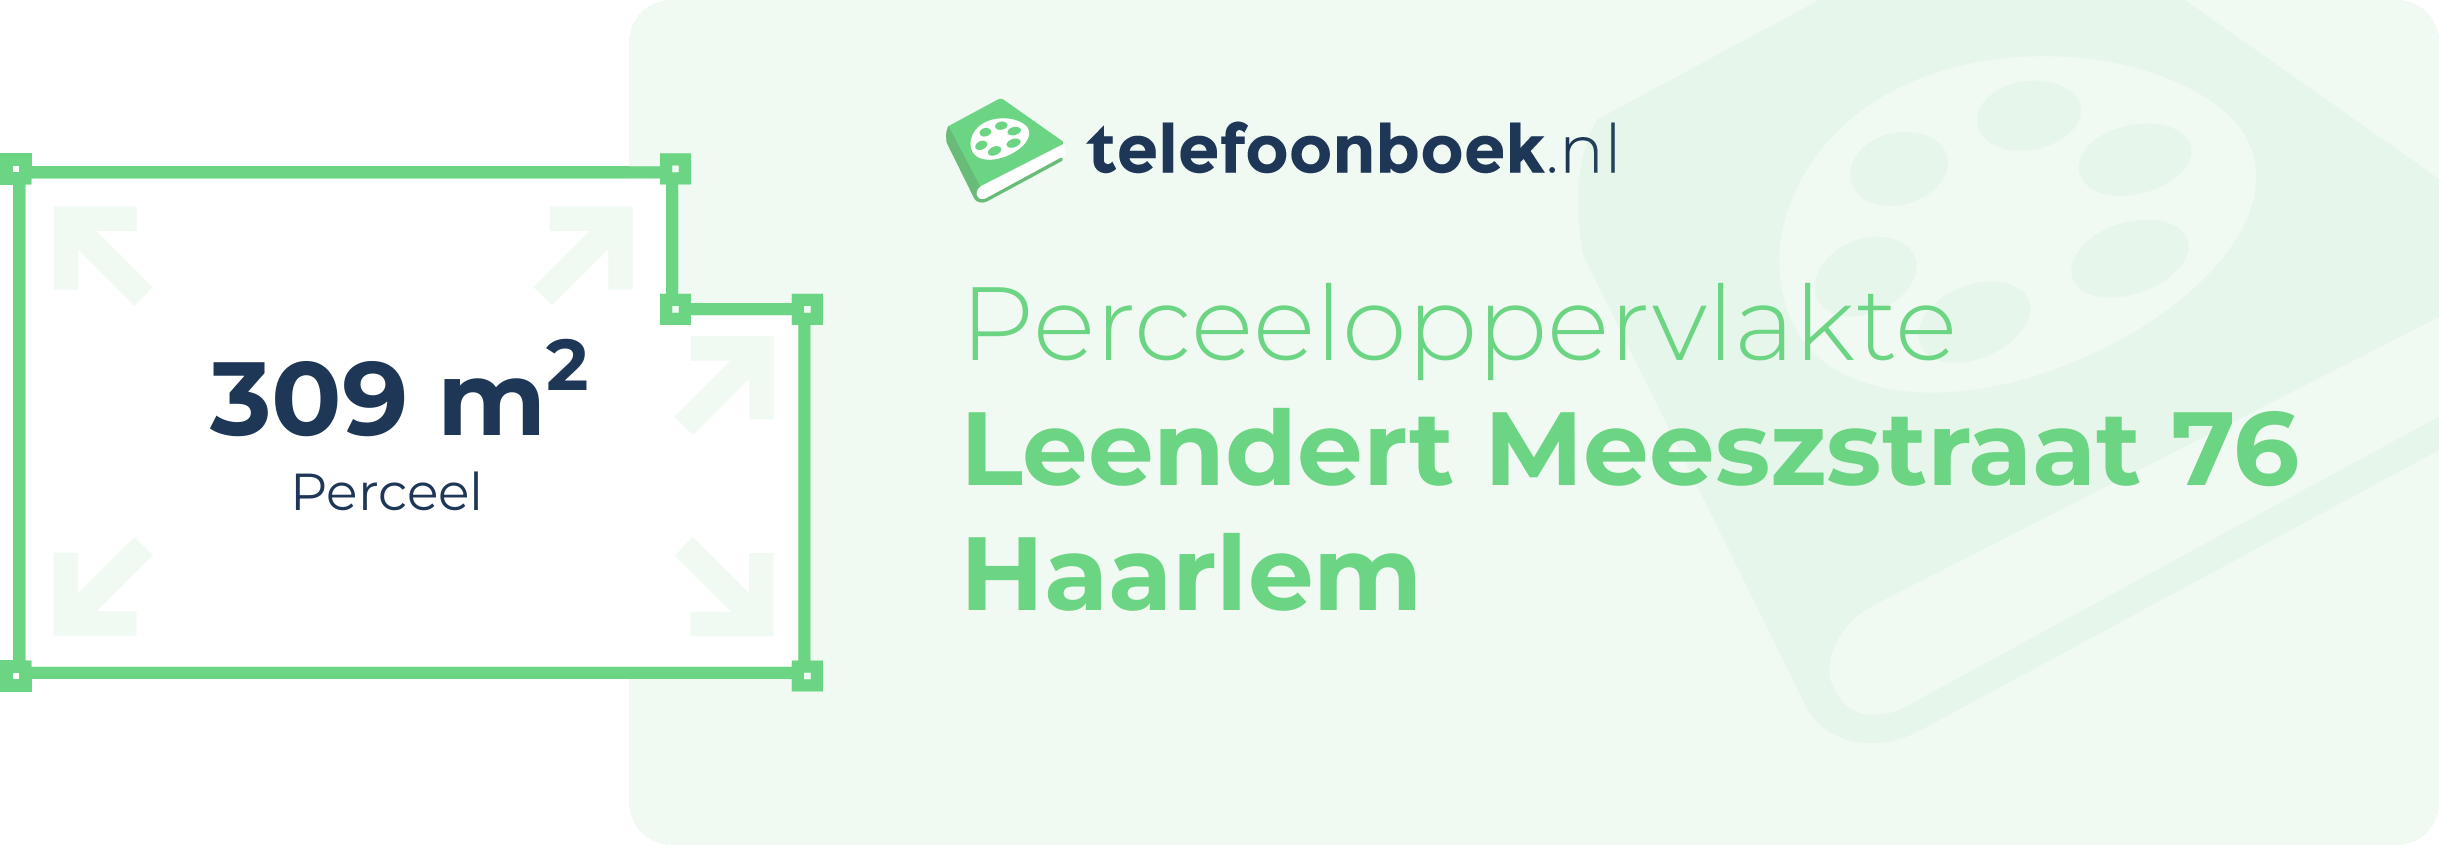 Perceeloppervlakte Leendert Meeszstraat 76 Haarlem